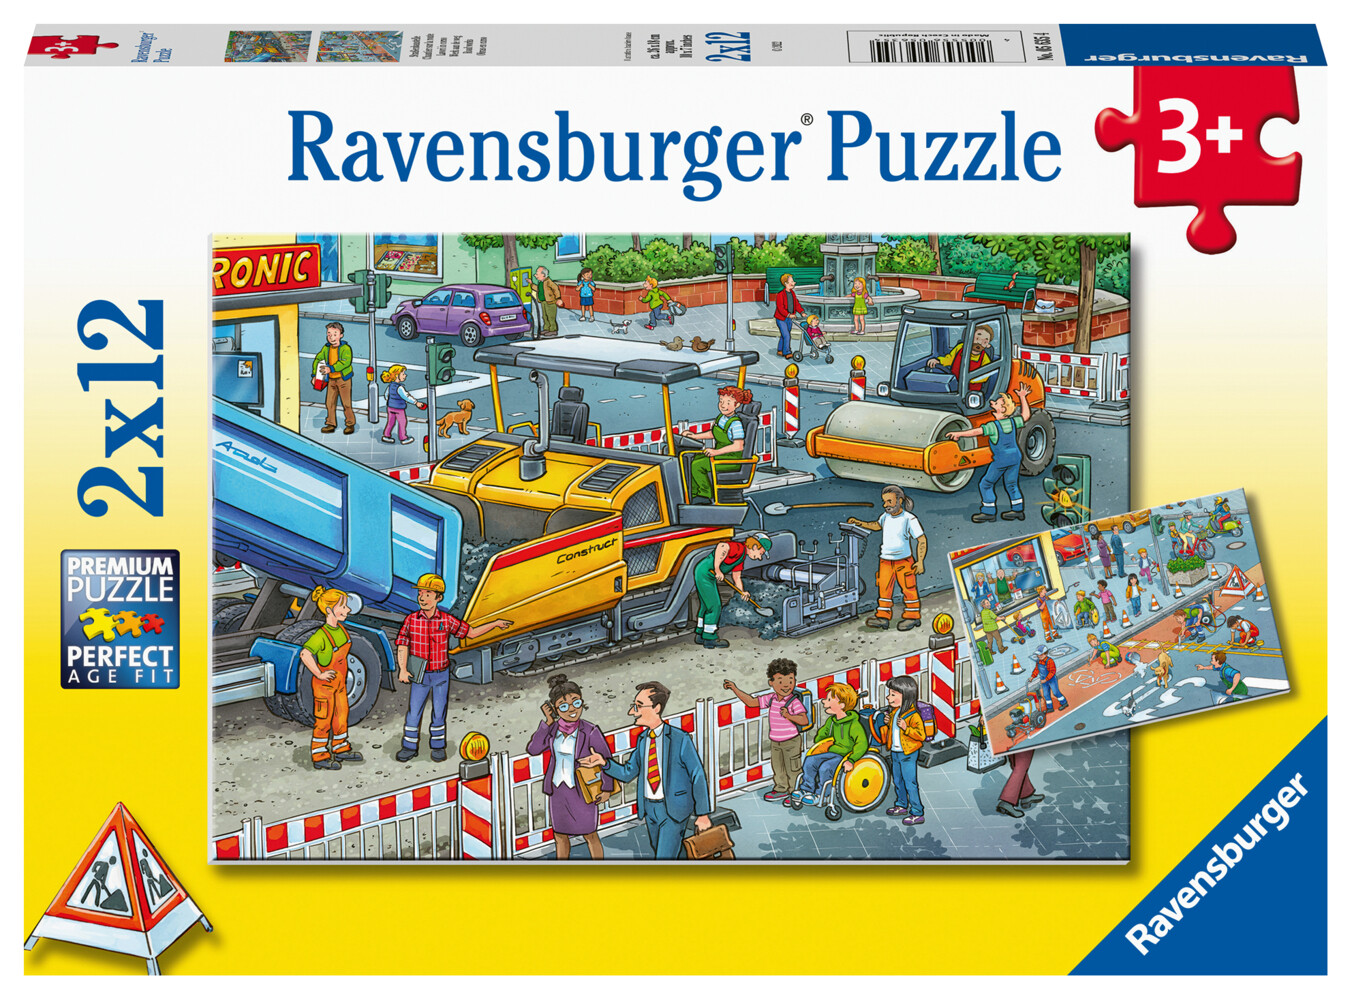 Ravensburger Kinderpuzzle - Straßenbaustelle - 2x12 Teile Puzzle für Kinder ab 3 Jahren